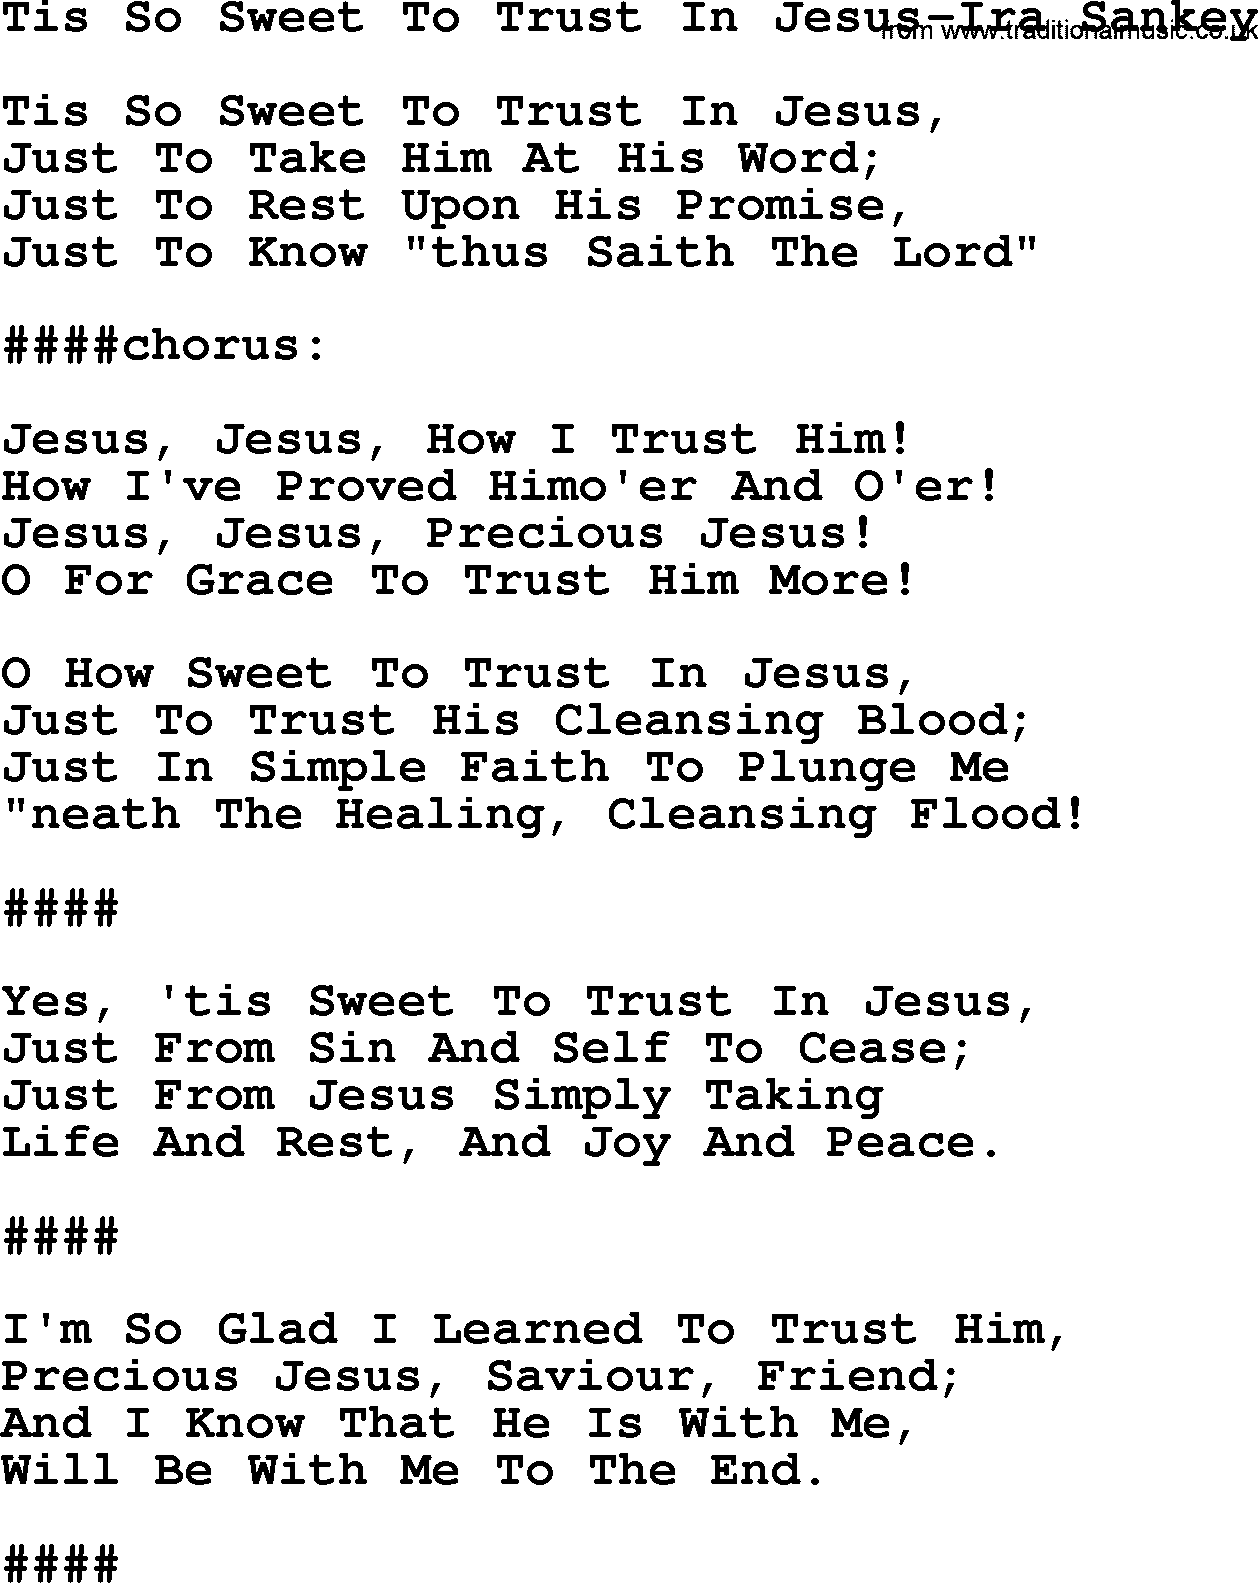 Ira Sankey hymn: Tis So Sweet To Trust In Jesus-Ira Sankey, lyrics